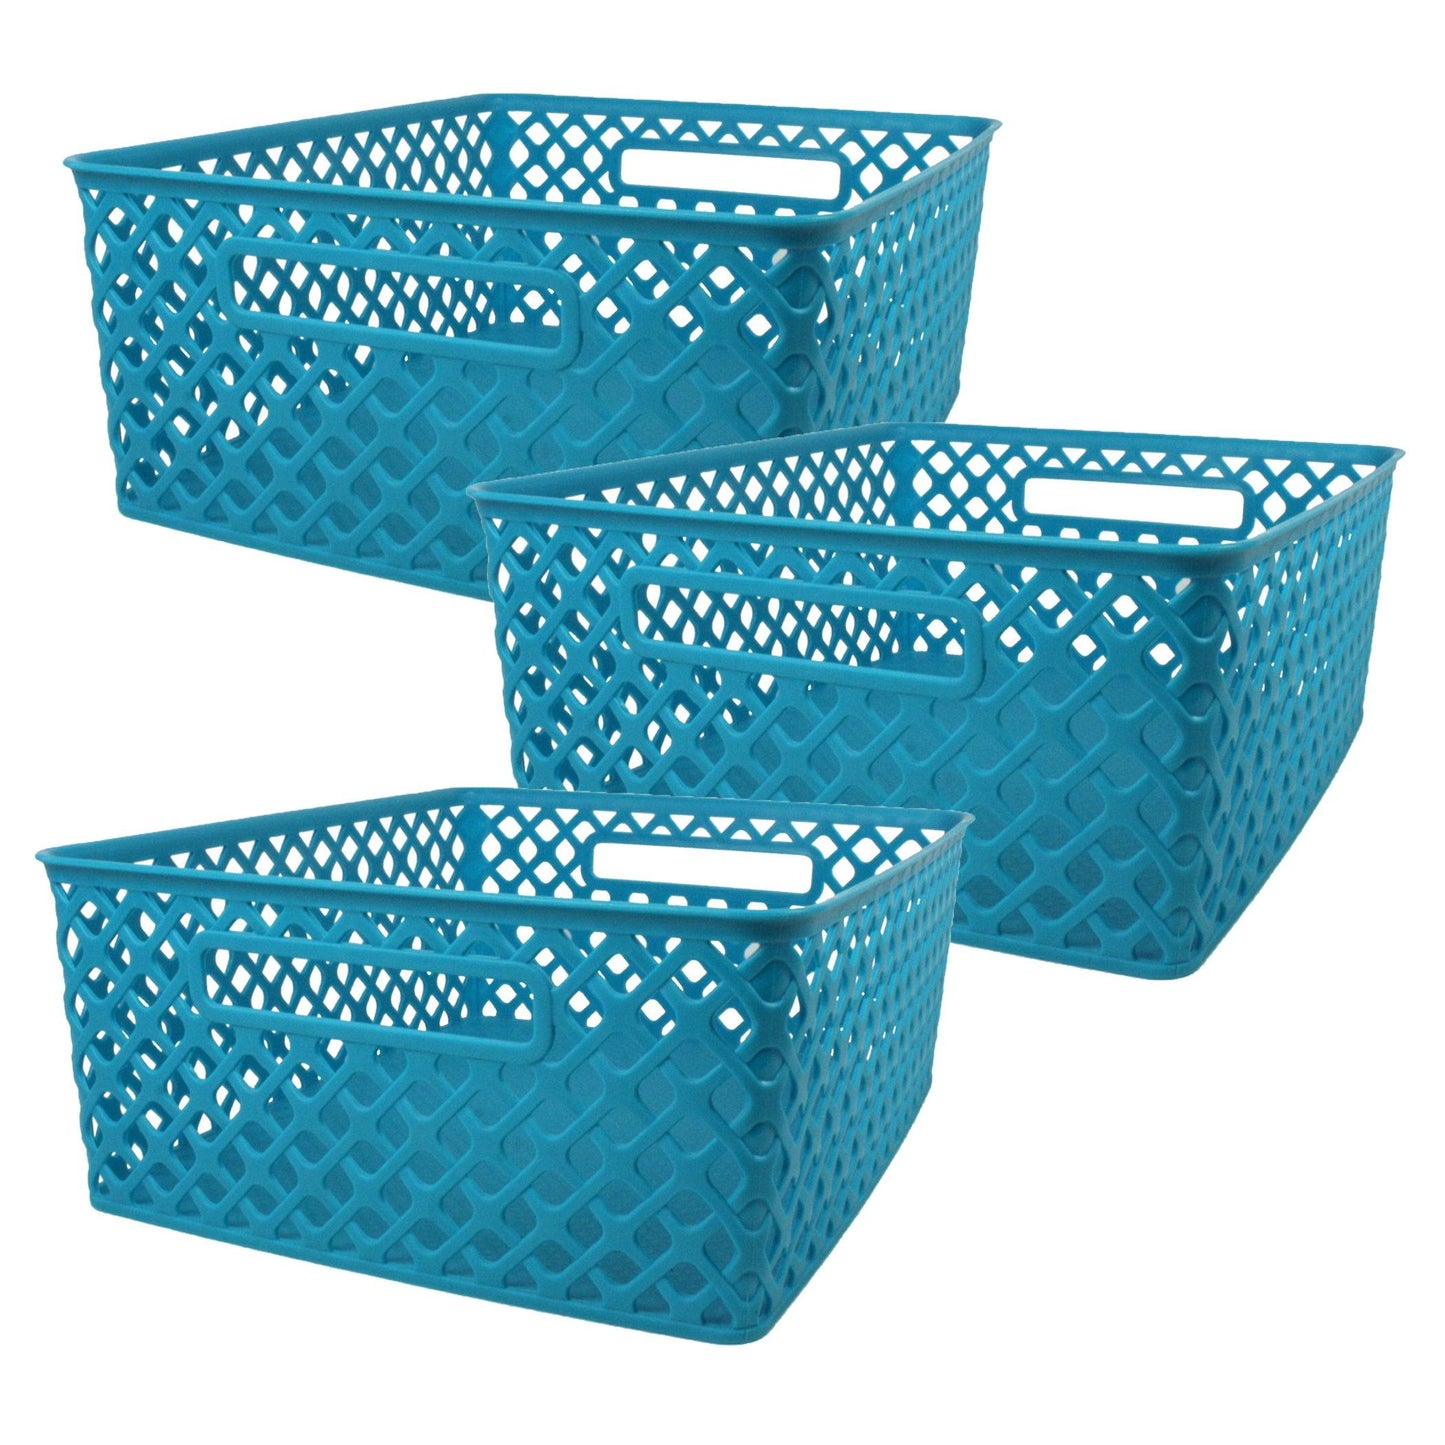 Woven Basket, Medium, Turquoise, Pack of 3 - Loomini